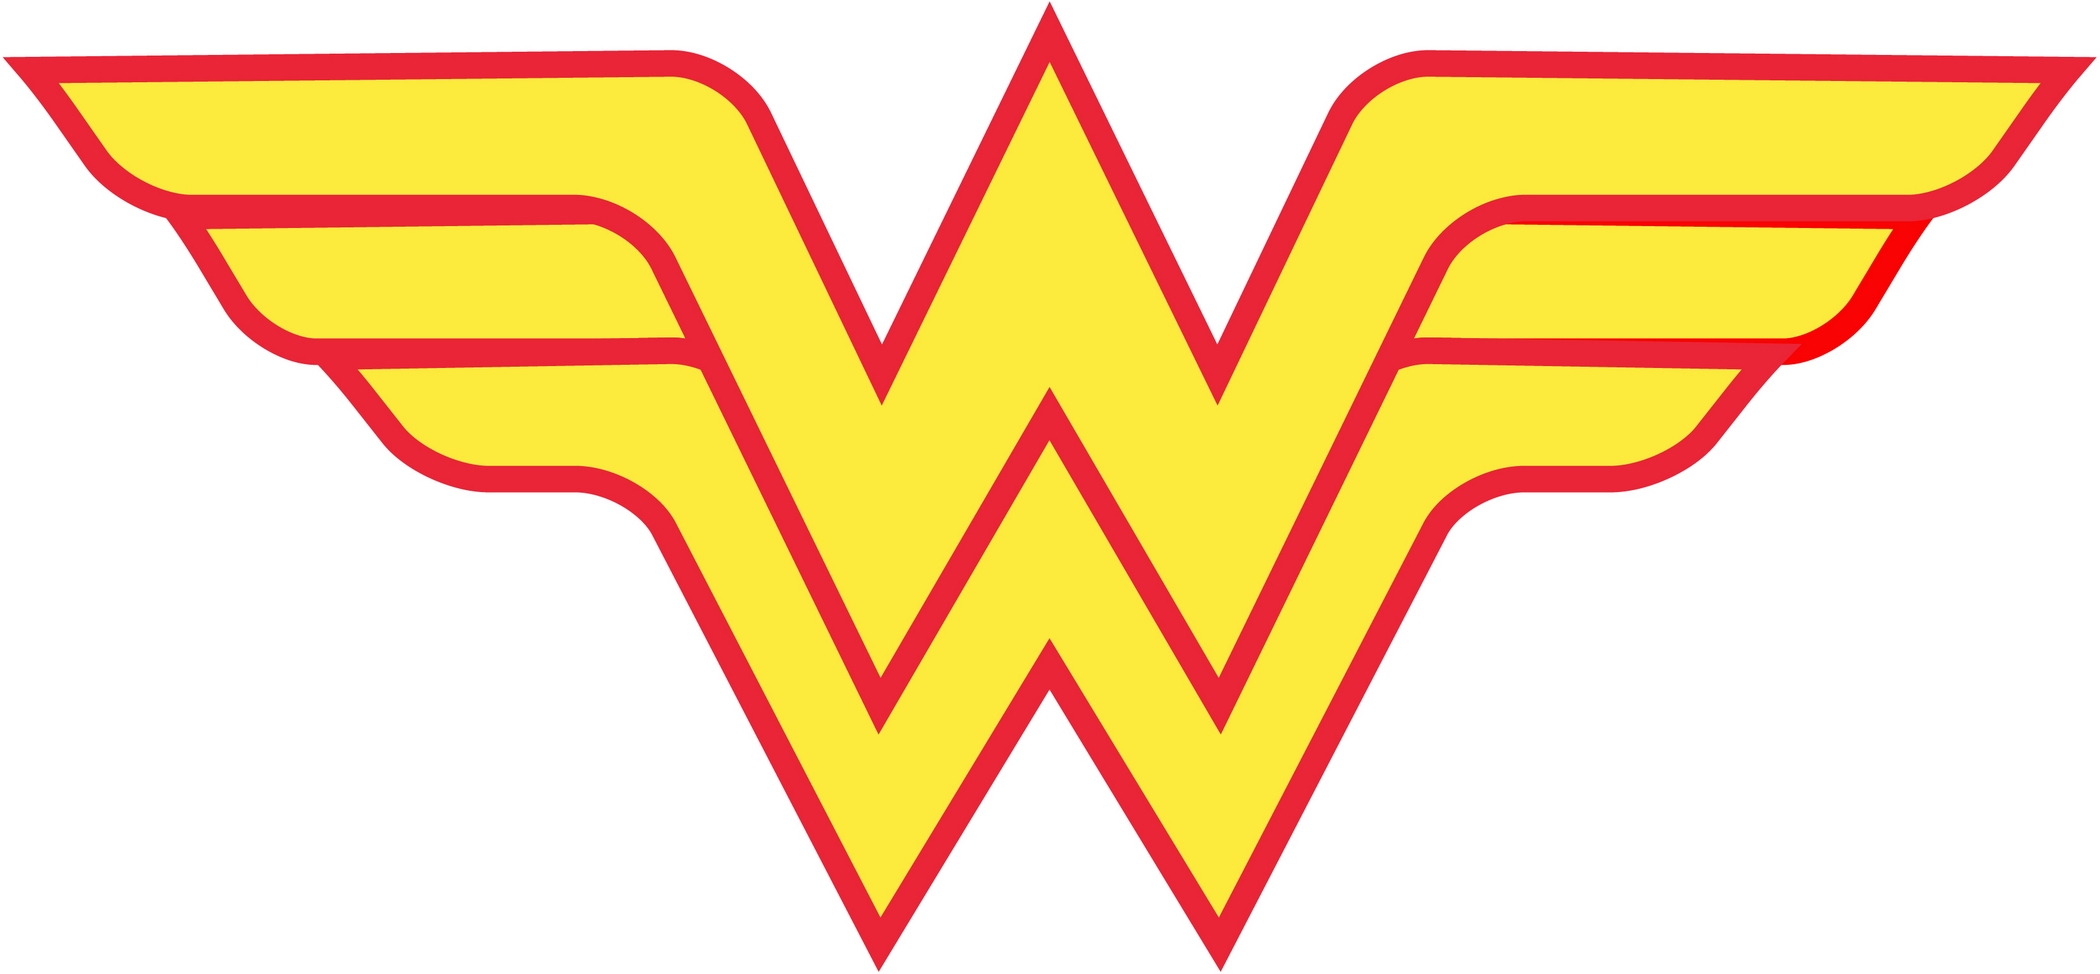 wonder woman logo | Logospike.com: Famous and Free Vector Logos